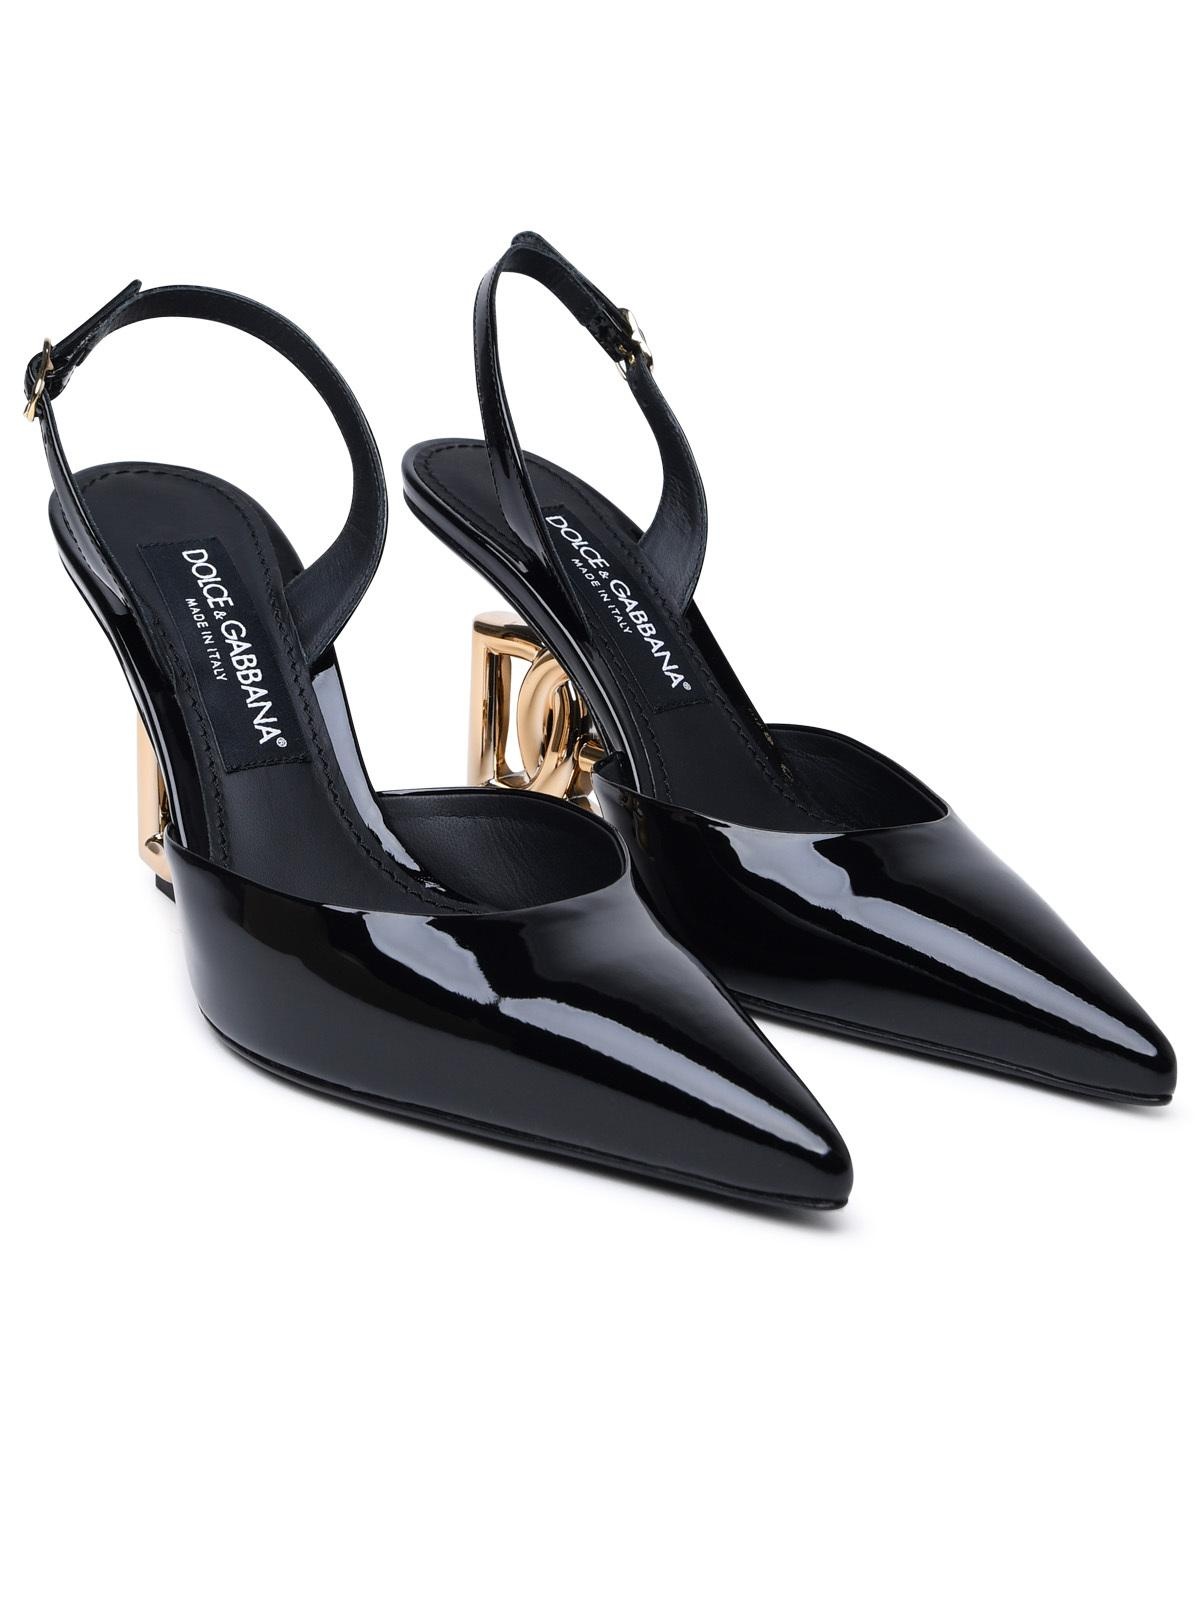 Dolce & Gabbana Black Patent Leather Pumps Woman - 2